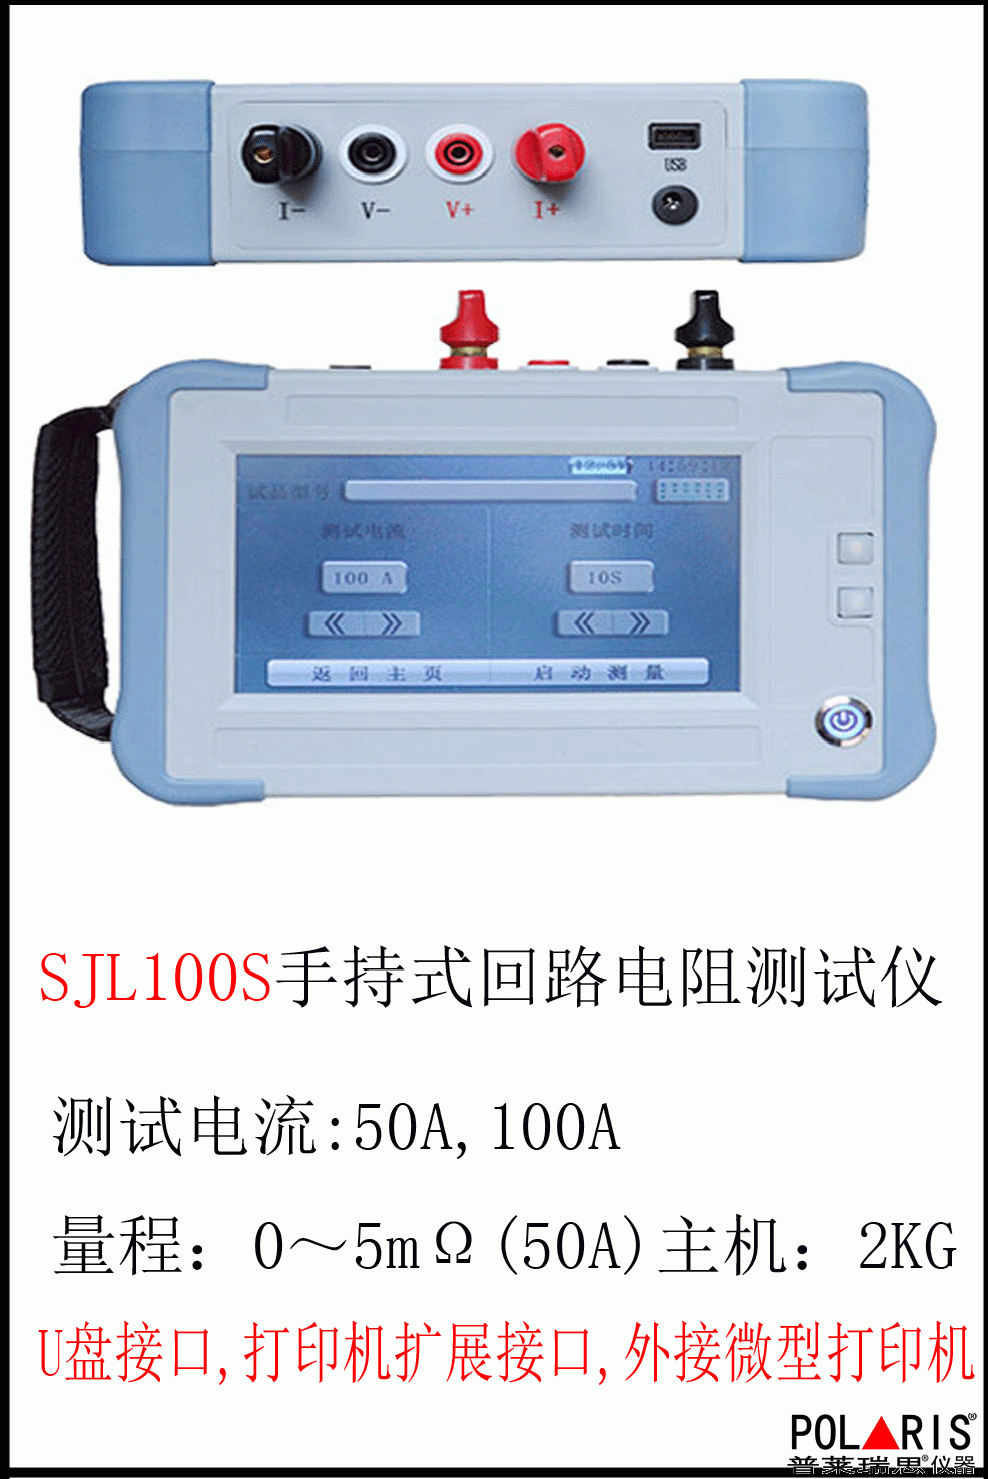 SJL100S 手持式回路电阻测试仪